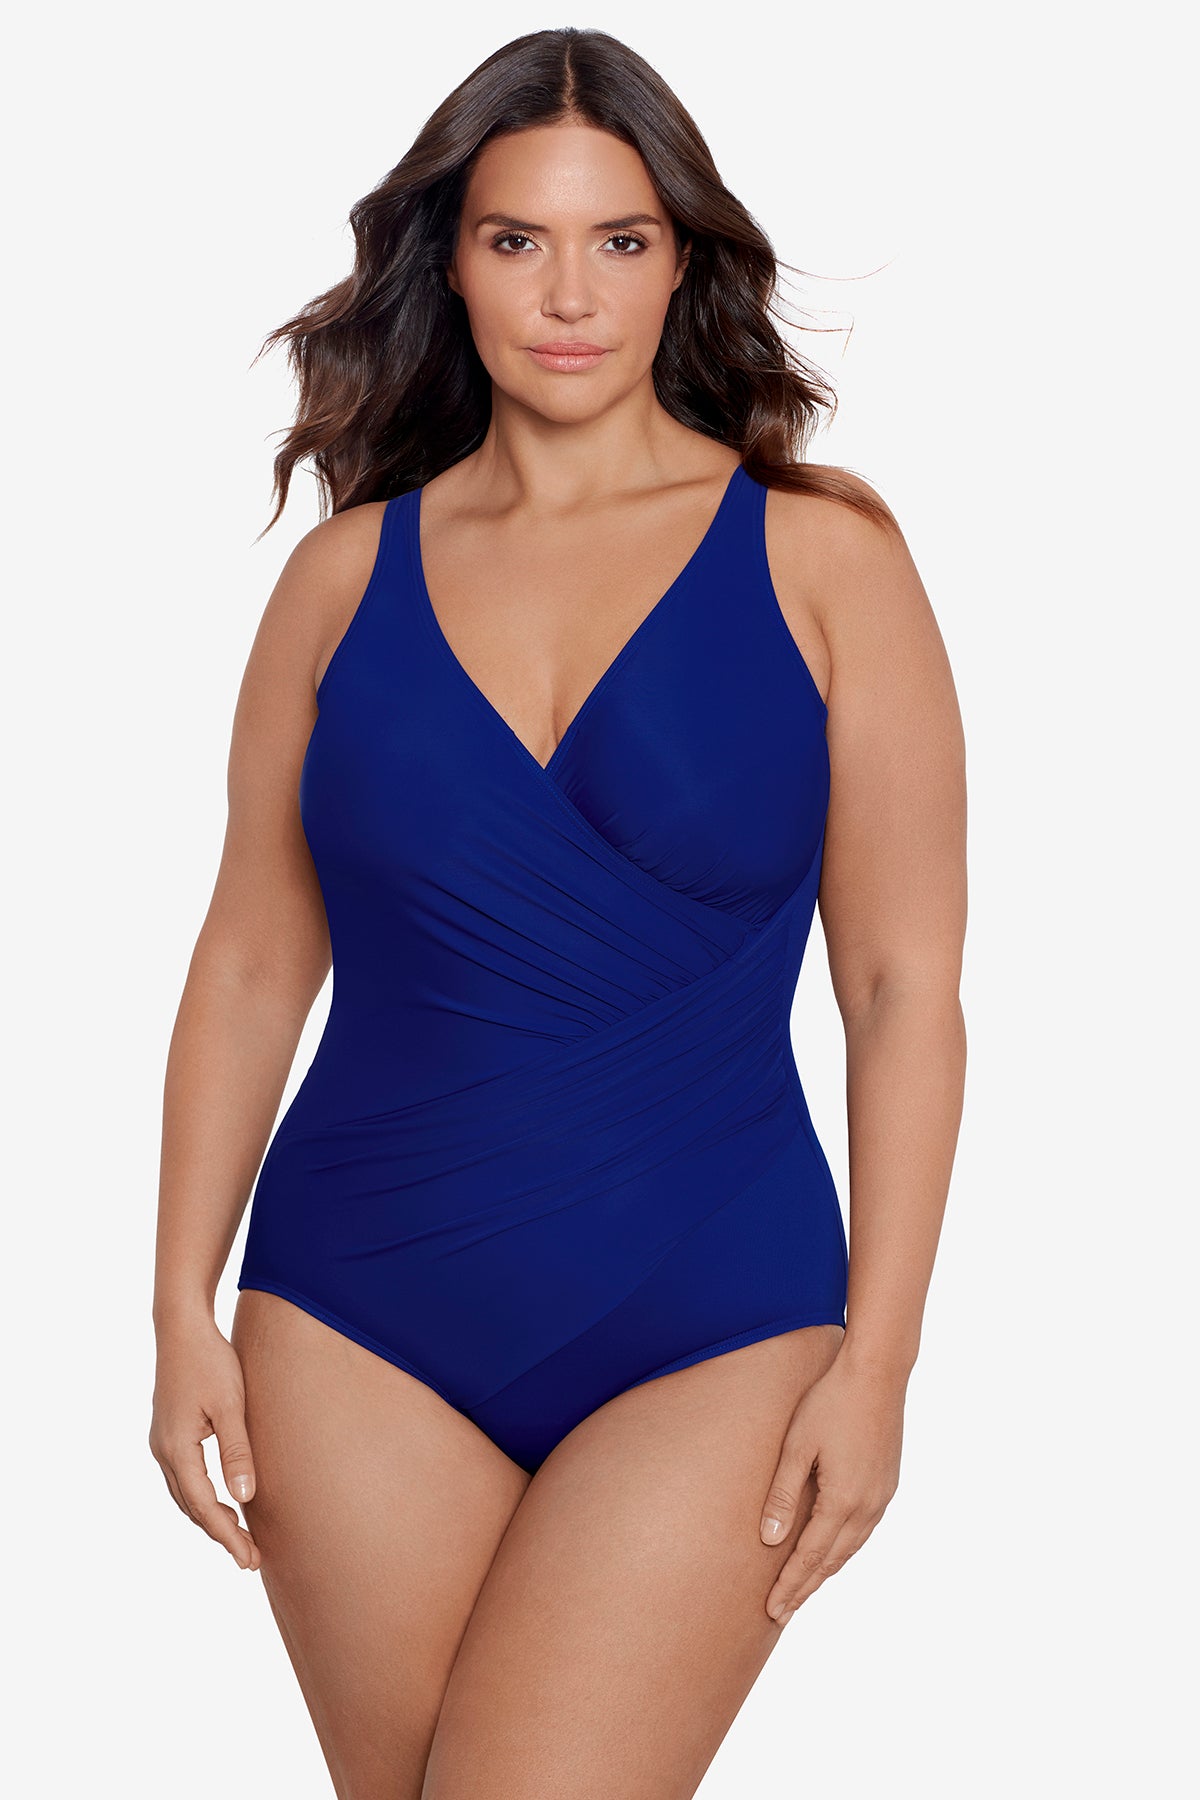 Women Plus Size One Piece Swimsuit, Womens Swimming Costume